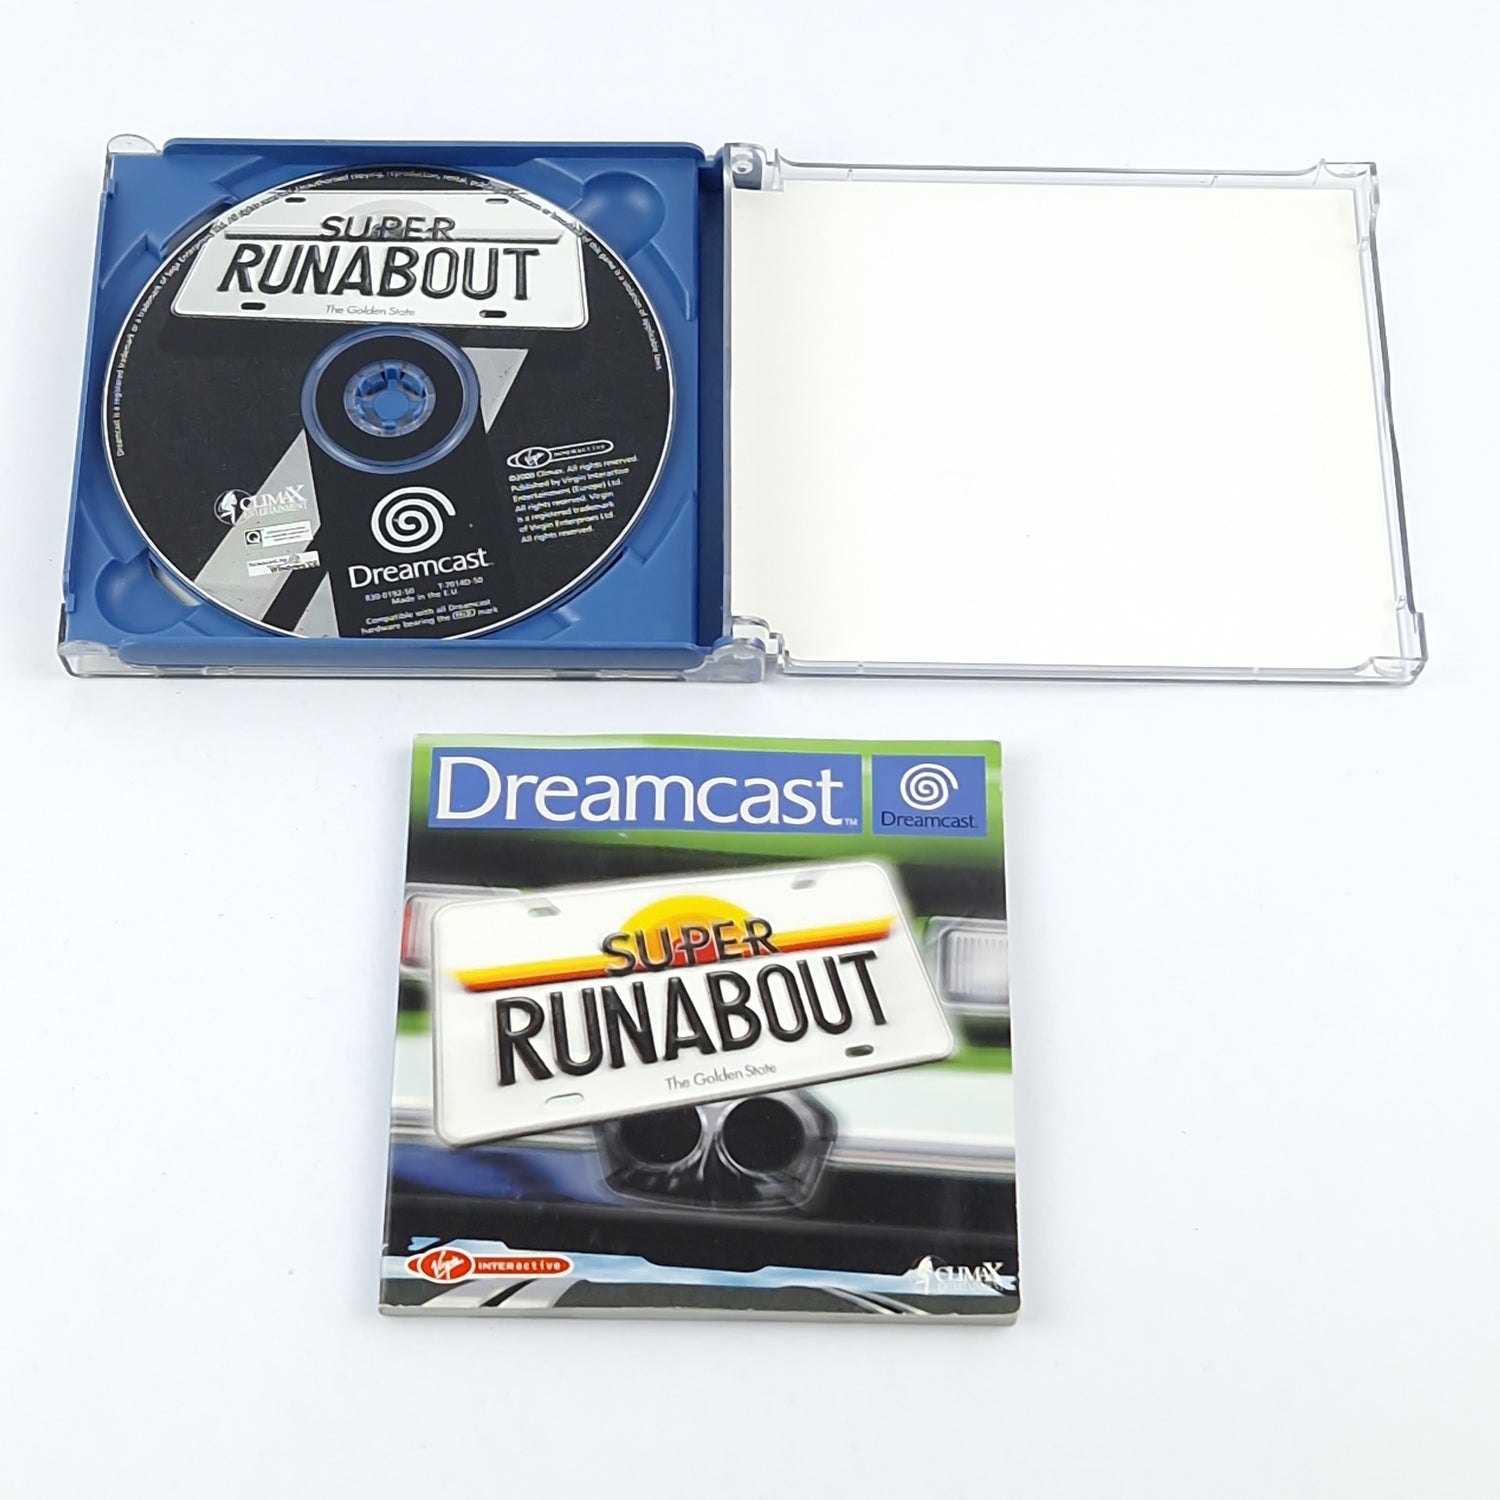 Sega Dreamcast Spiel : Super Runabout The Golden State - CD Anleitung OVP PAL